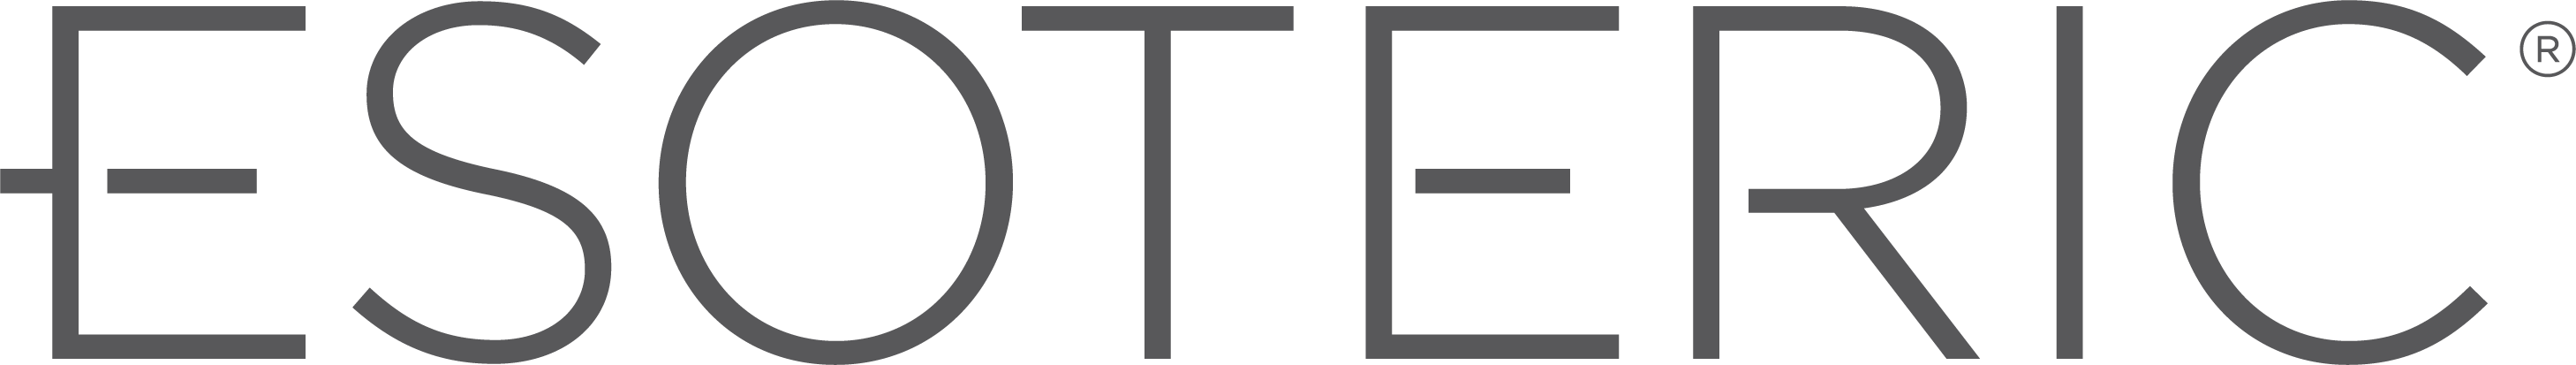 ESOTERIC Fine Auto Finishing logo